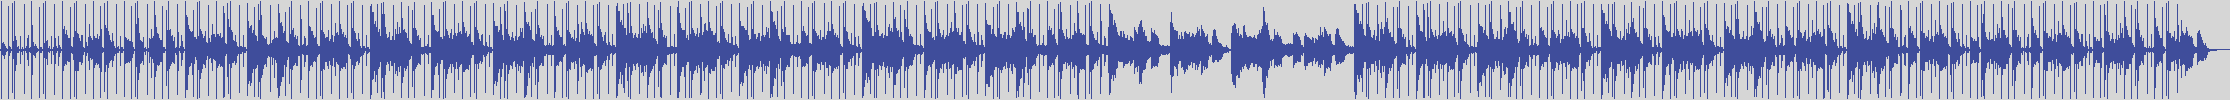 noclouds_chillout [NOC146] Yg - Praiano [Original Mix] audio wave form